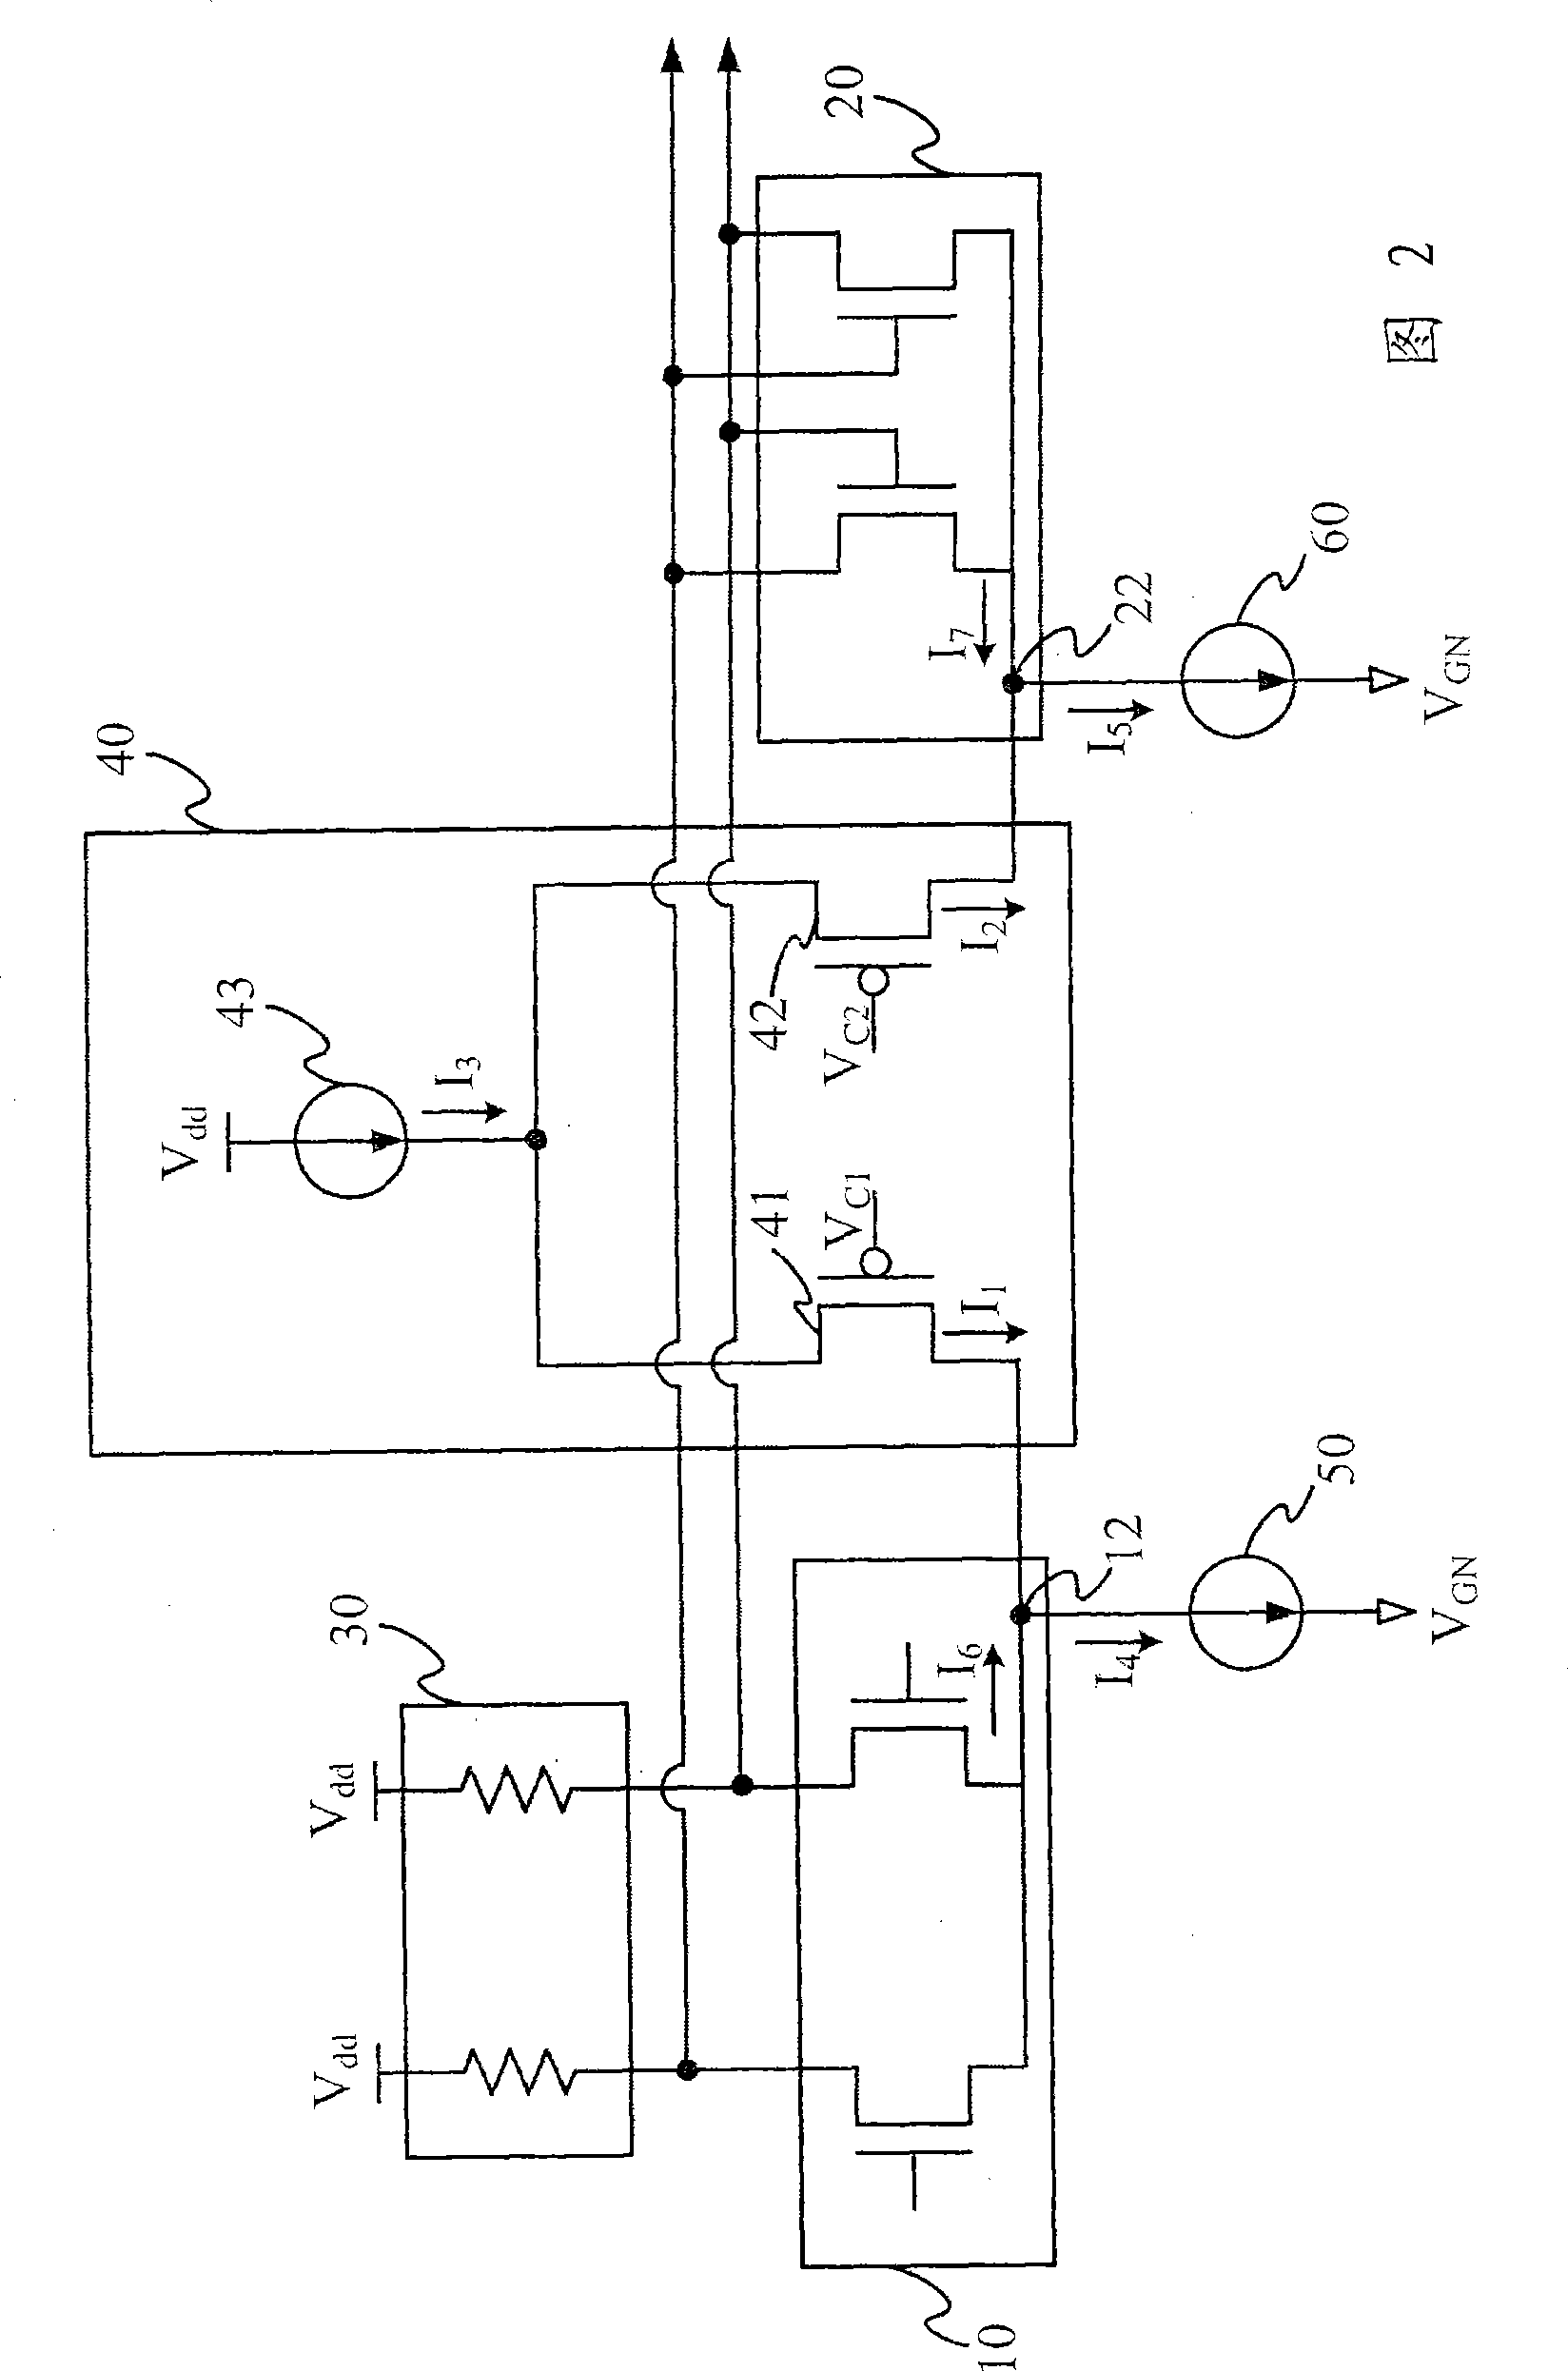 Voltage control oscillating circuit